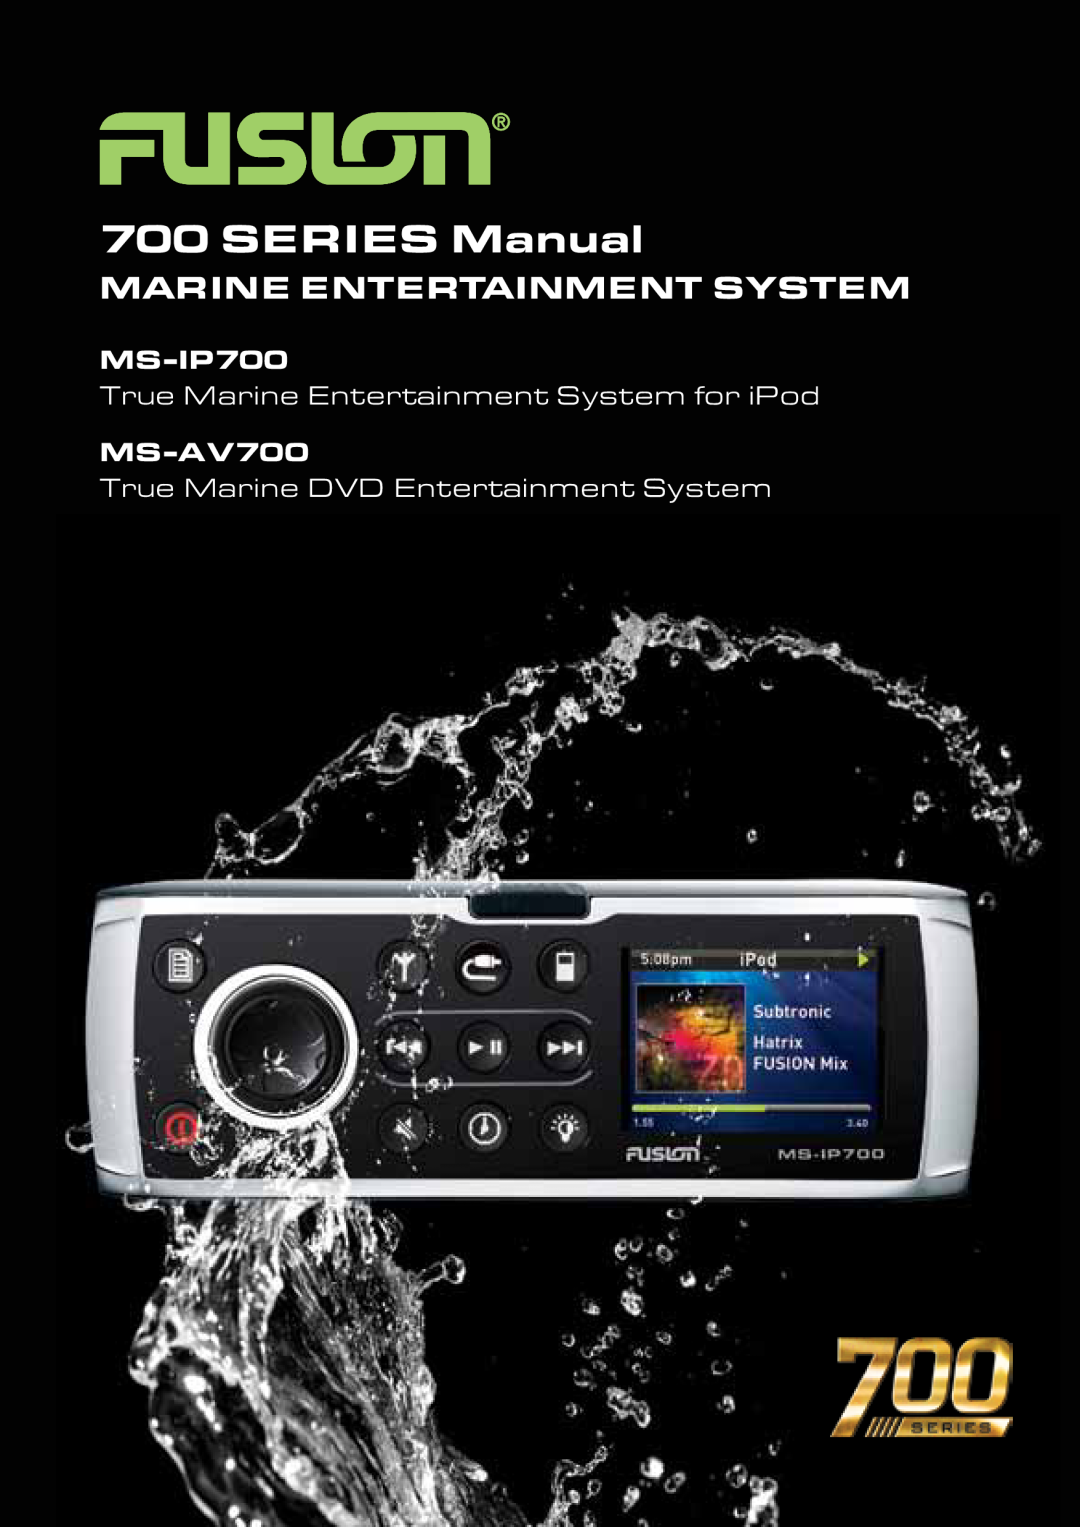 Fusion MS-AV700 manual MS-IP700, SERIES Manual, True Marine Entertainment System for iPod 